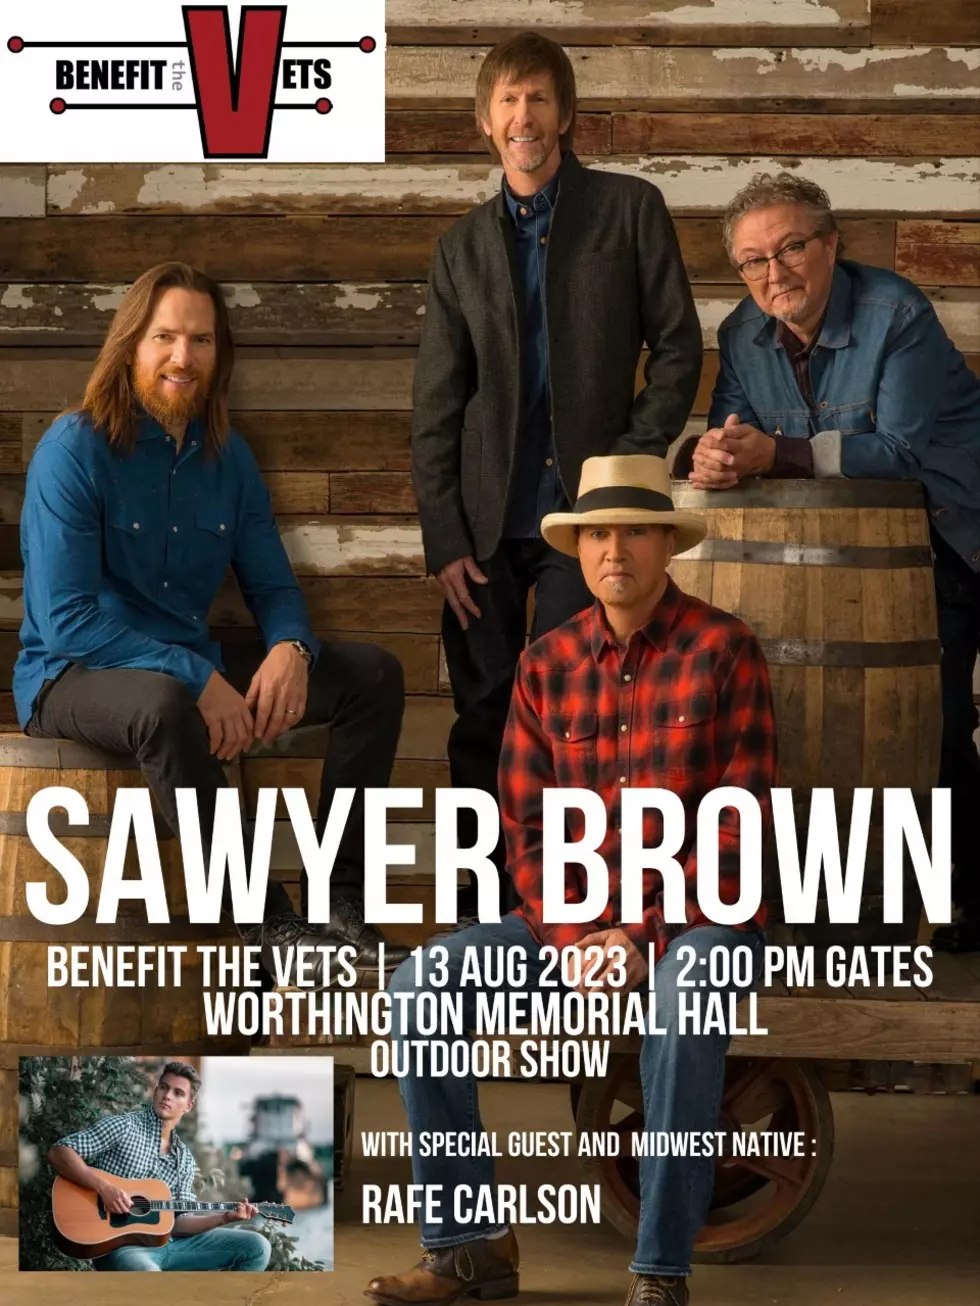 Sawyer Brown Concert in Worthington, IA to Benefit Veterans